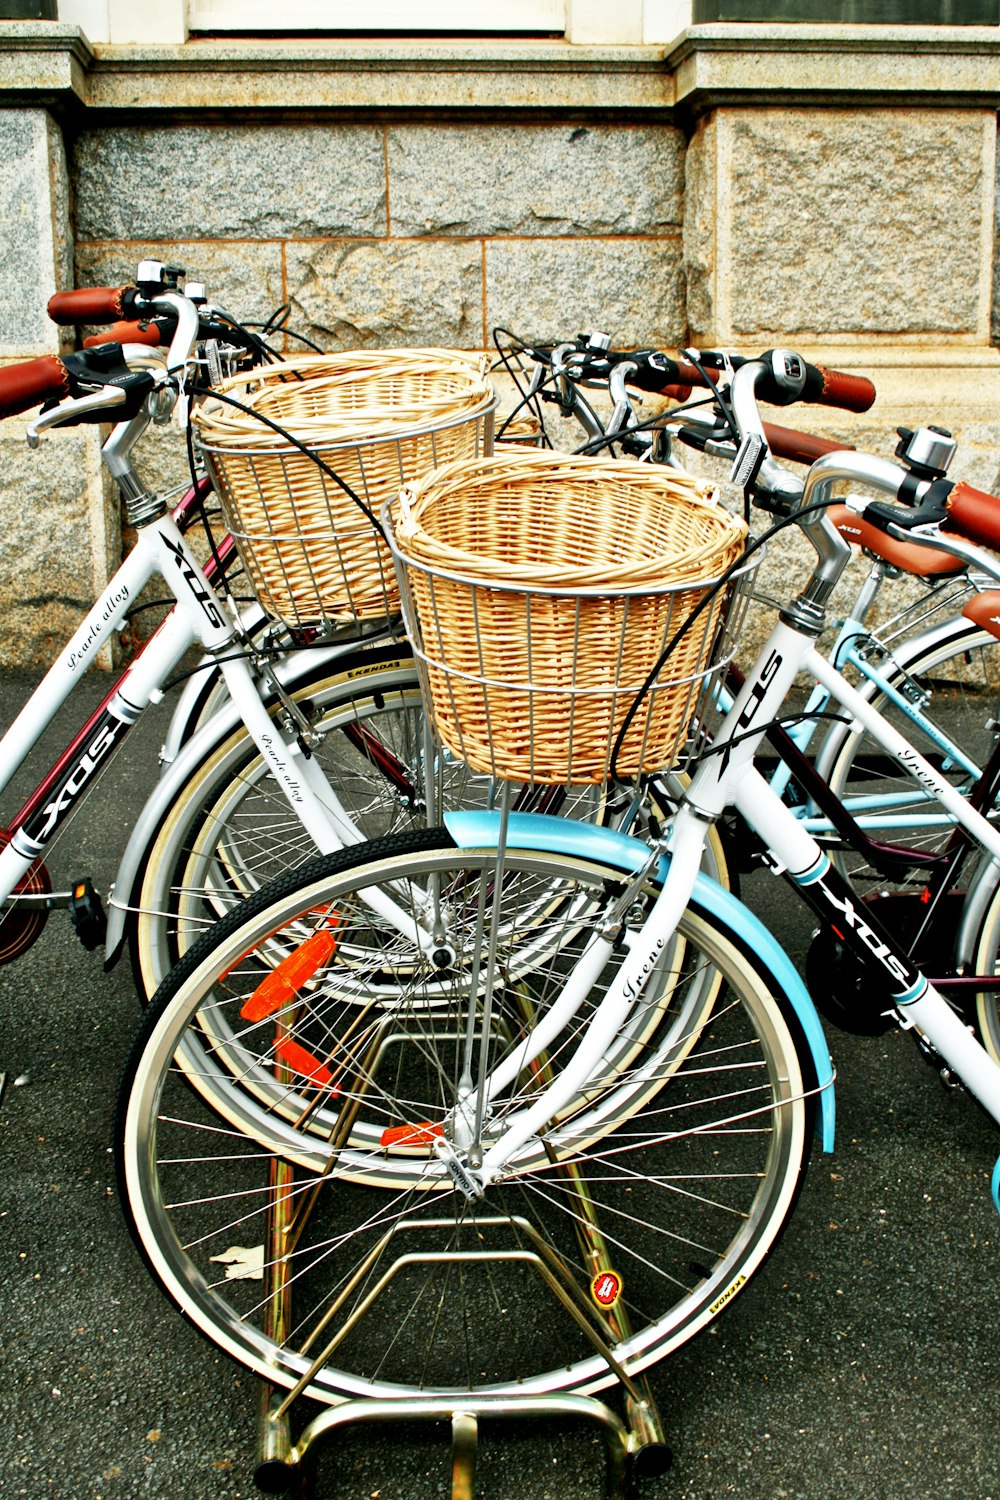 Cesta tejida marrón en bicicleta